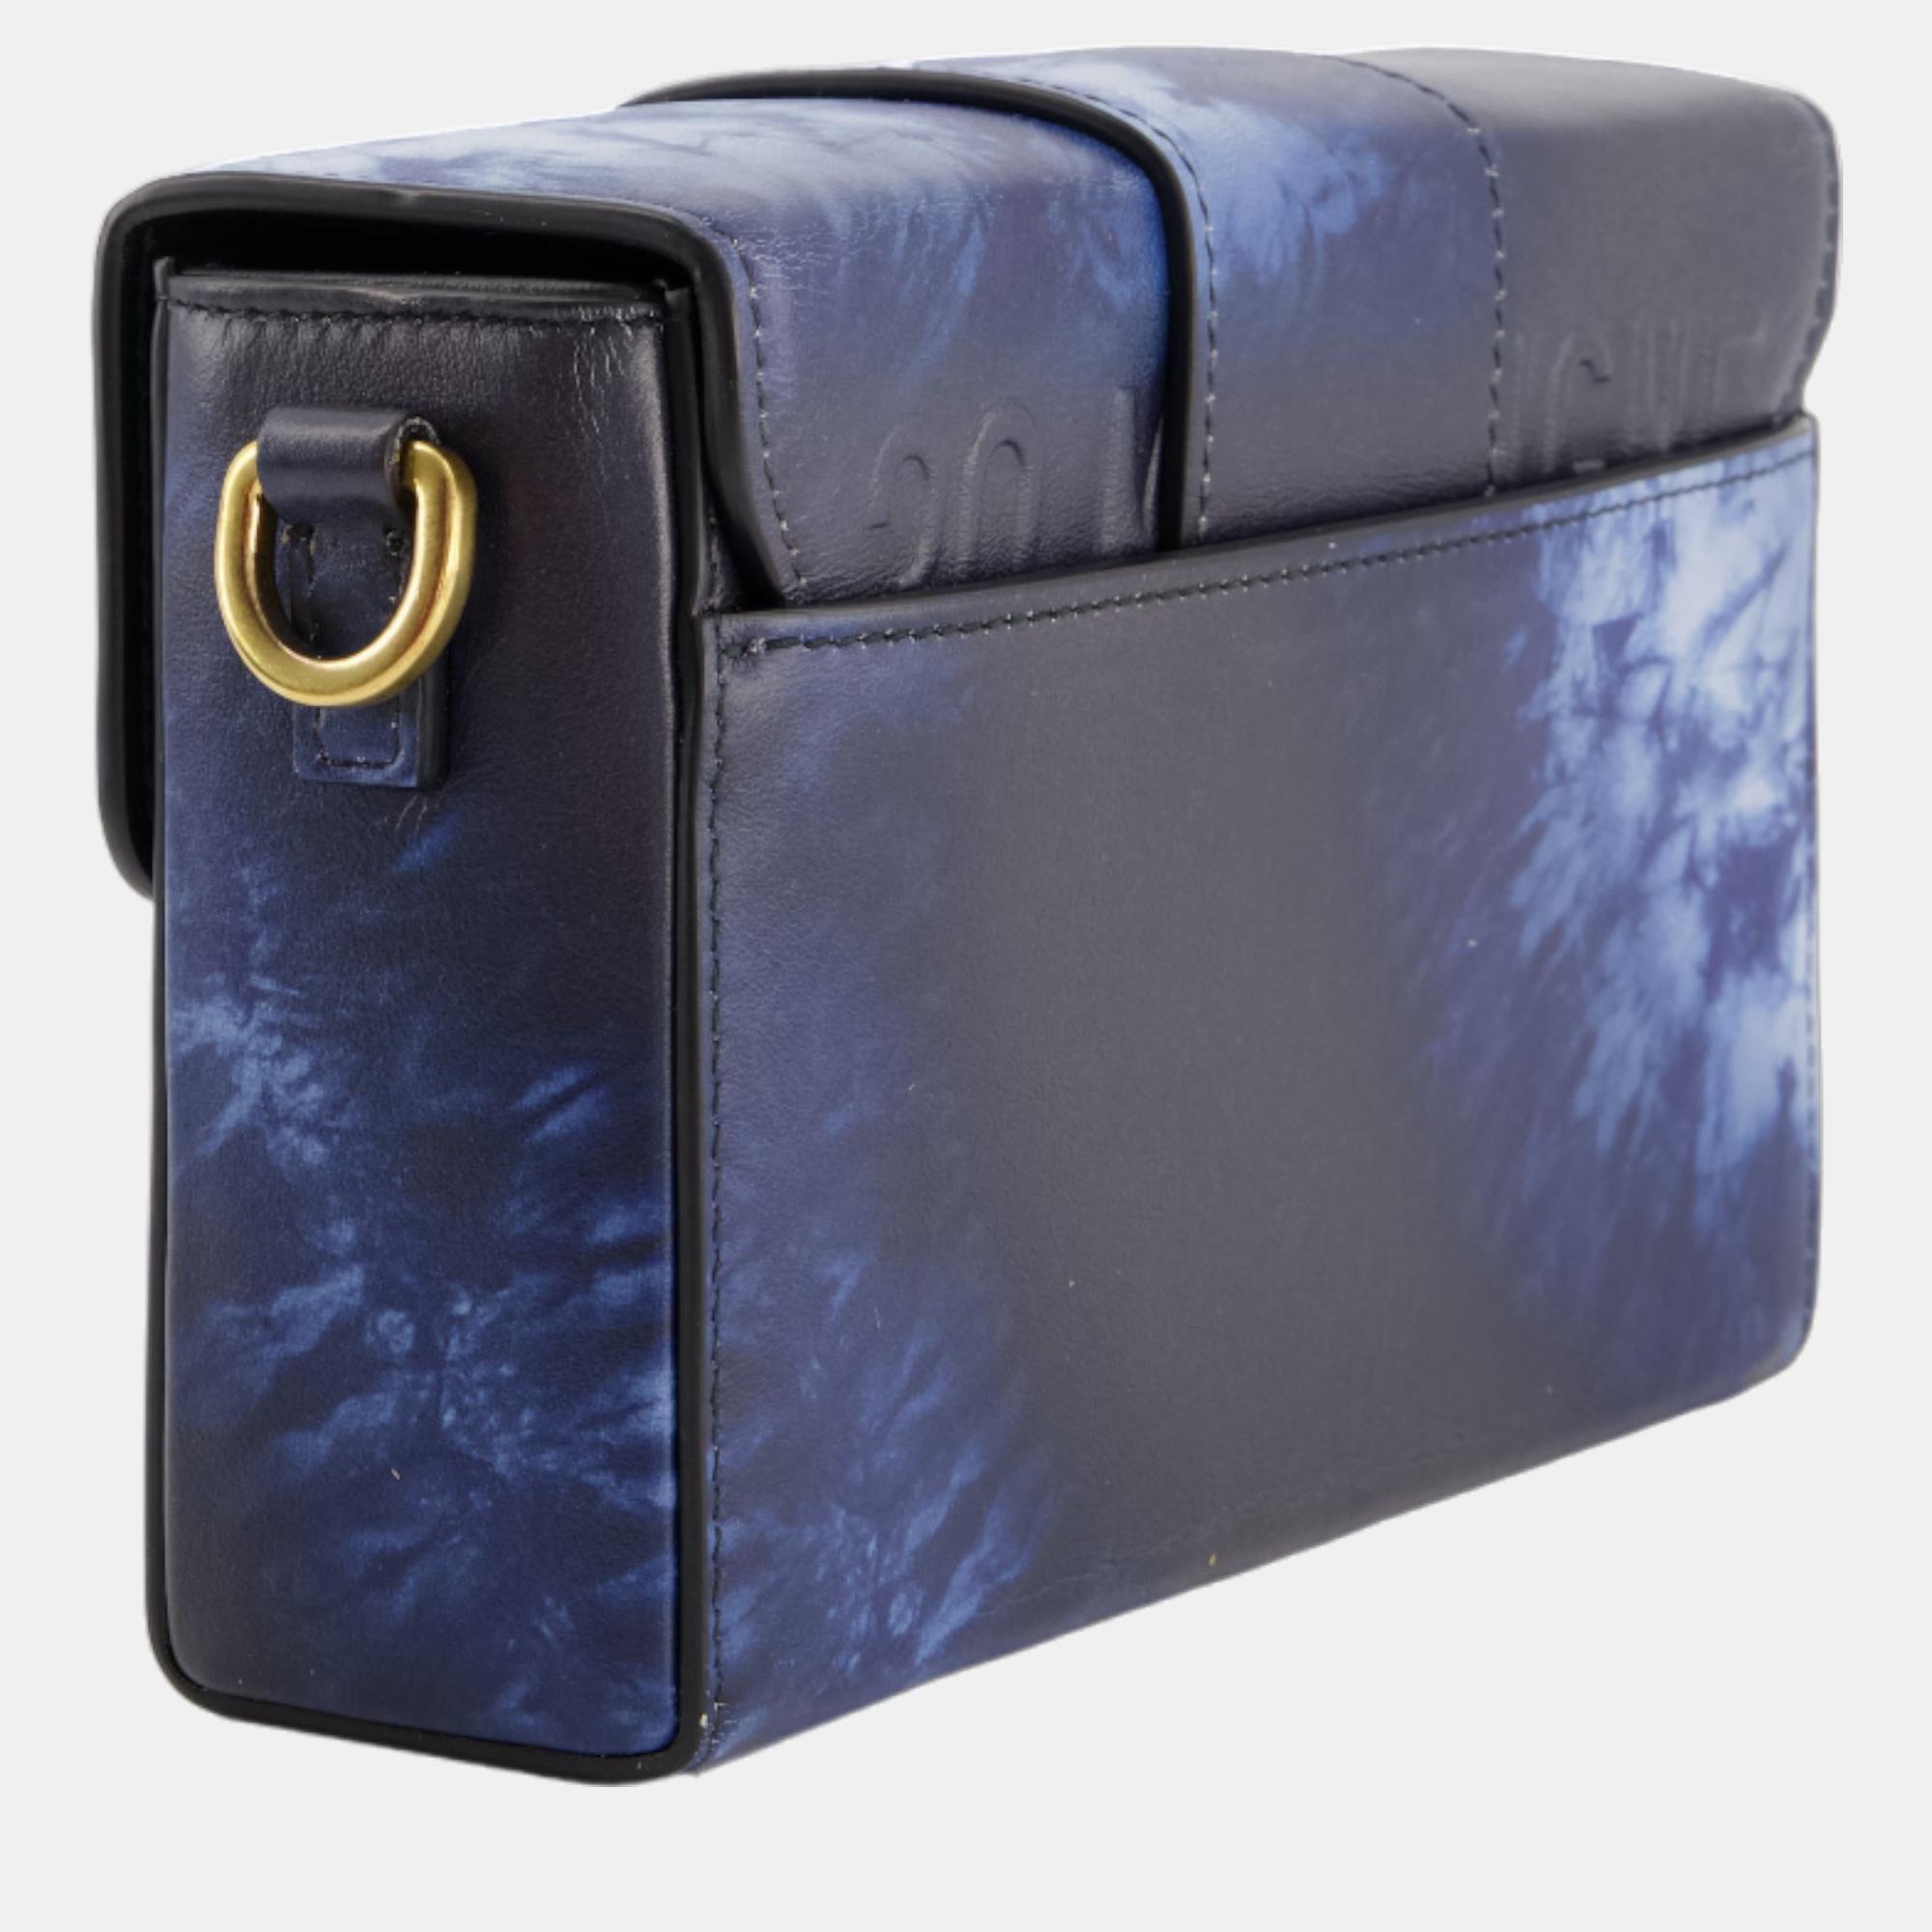 Christian Dior Blue Tye Dye Micro 30 Montaigne Box Bag With Gold Hardware